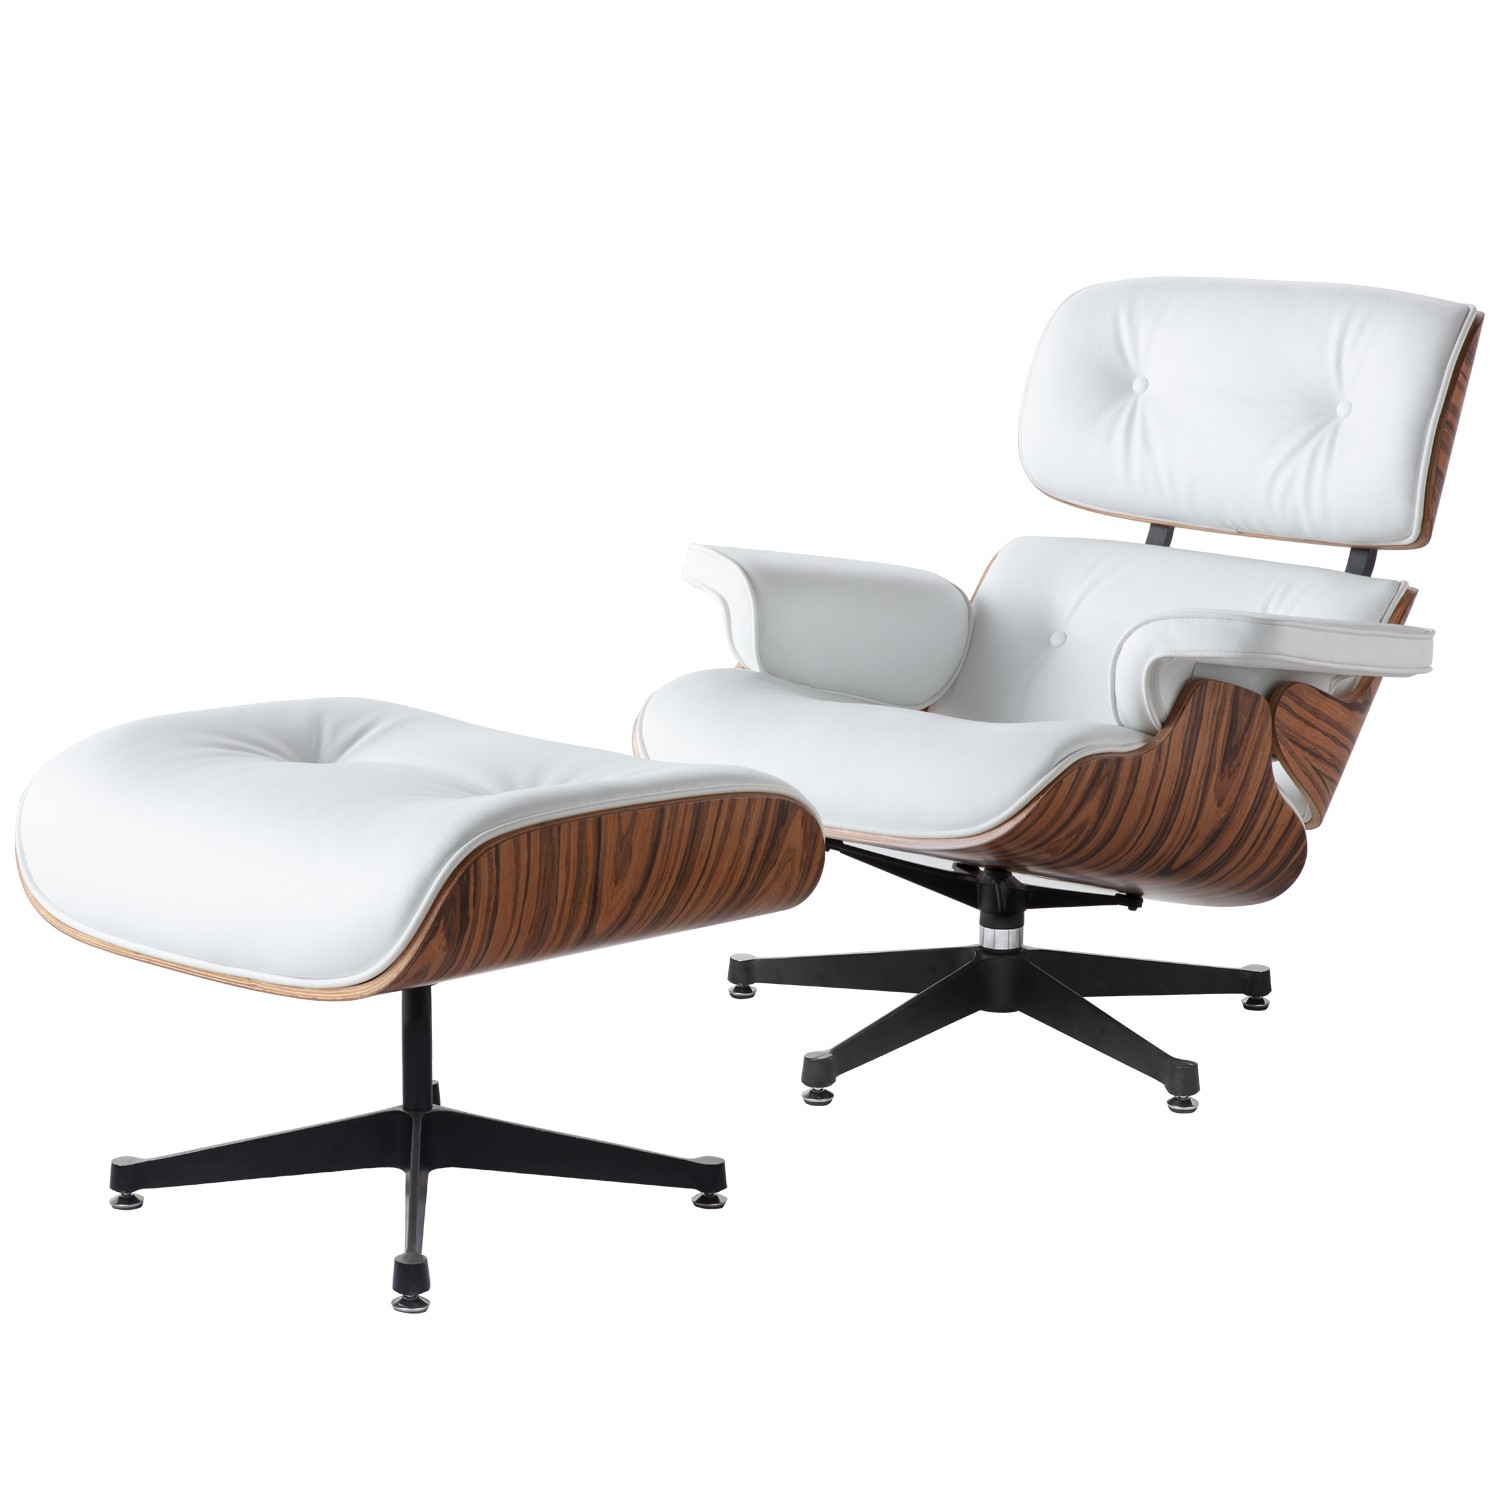 Lounge Chair Ottoman white| Retro Living Furniture